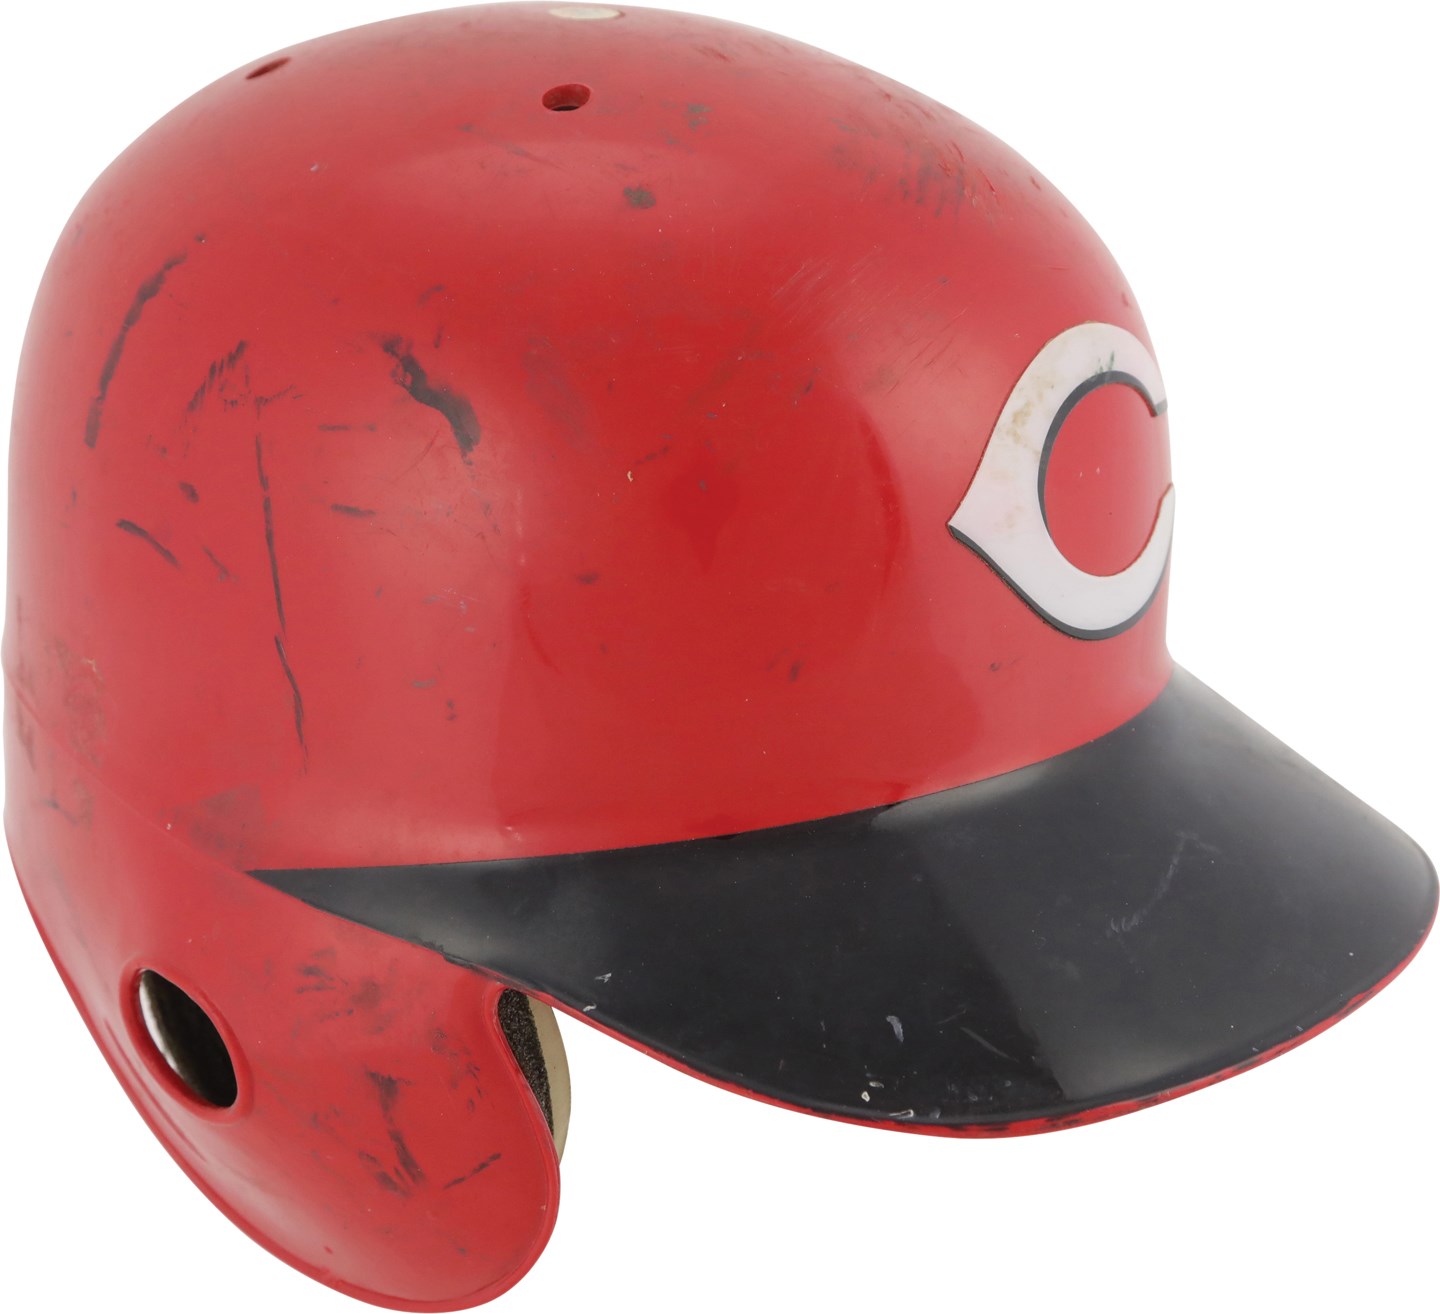 Baseball Equipment - Circa 2000 Ken Griffey Jr. Cincinnati Reds Game Used Helmet